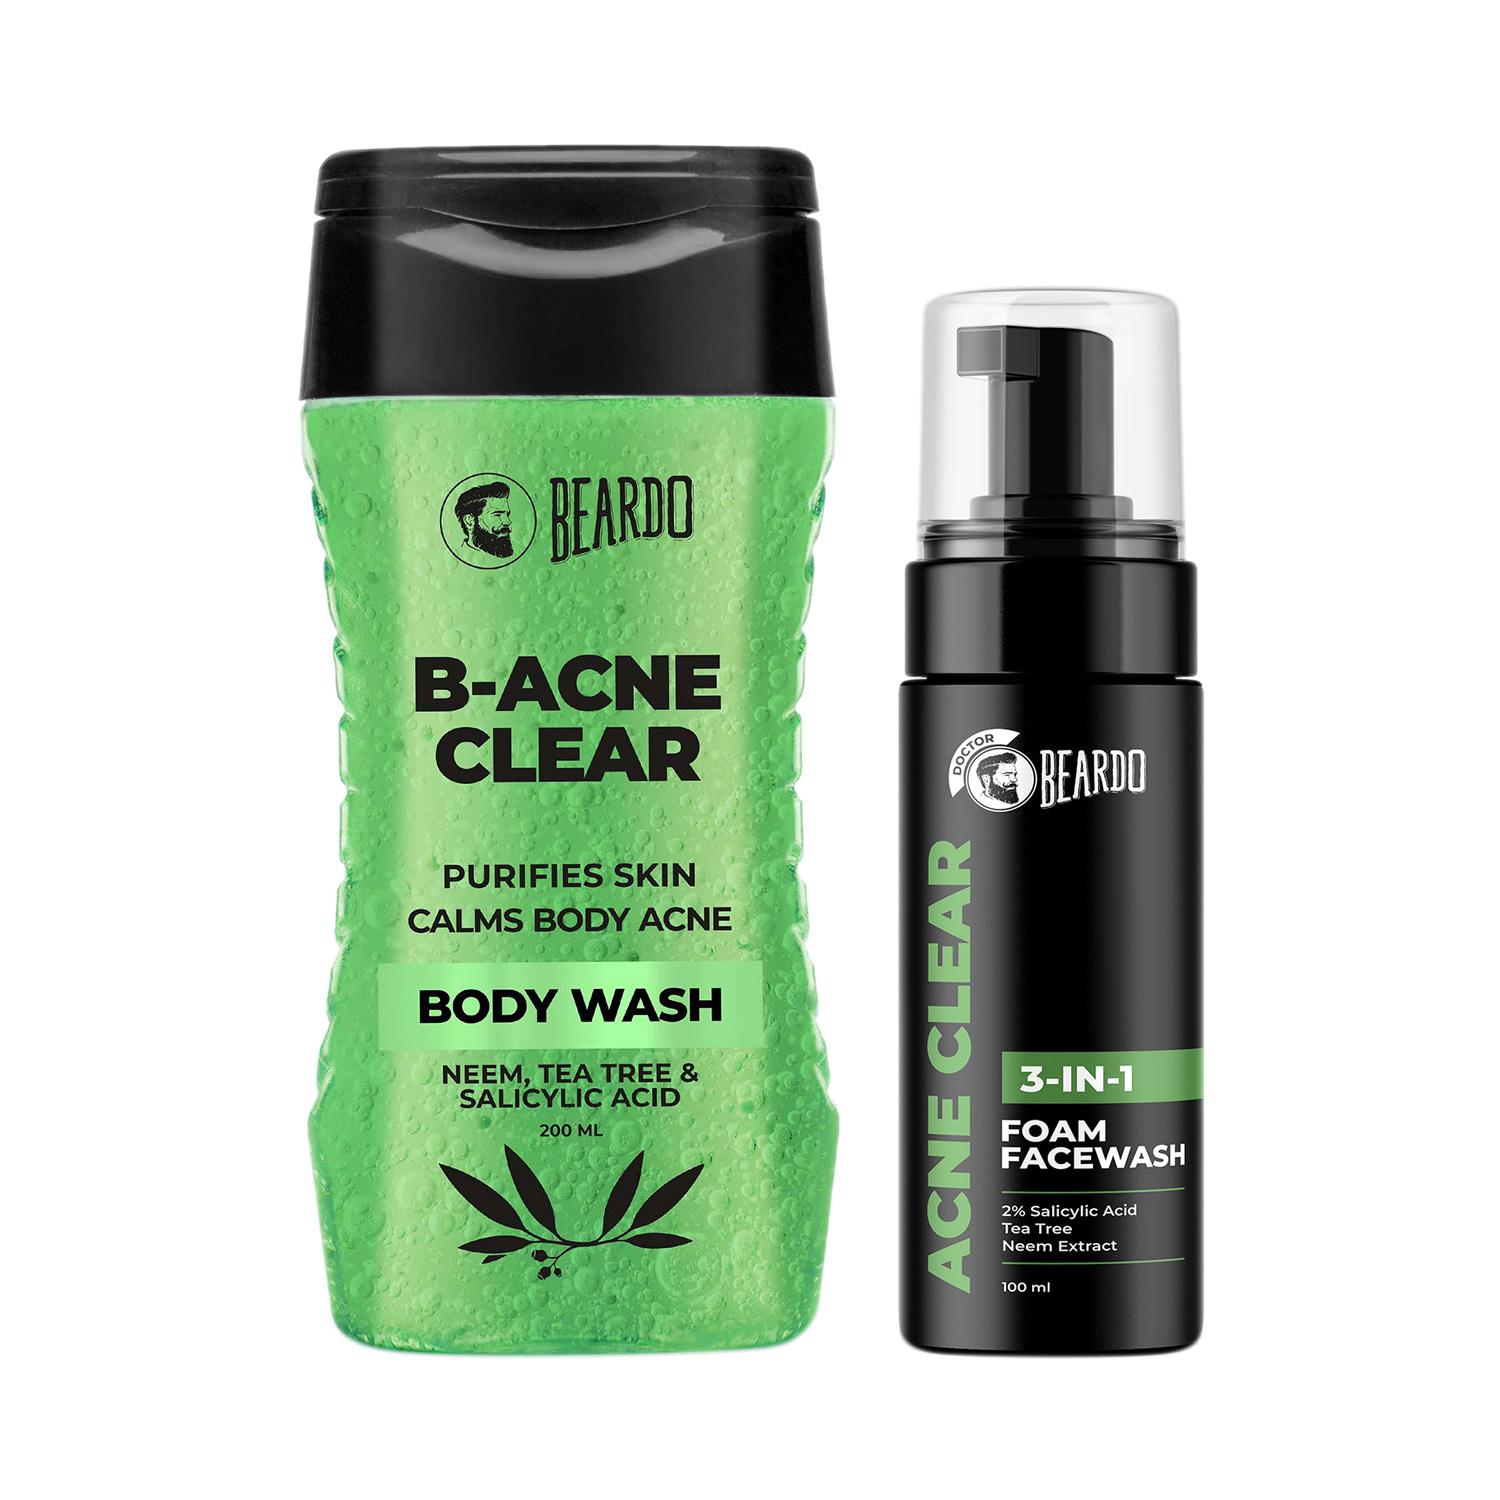 Beardo B-acne Clear Body Wash, Acne Clear Foam Face wash (Set of 2) Combo